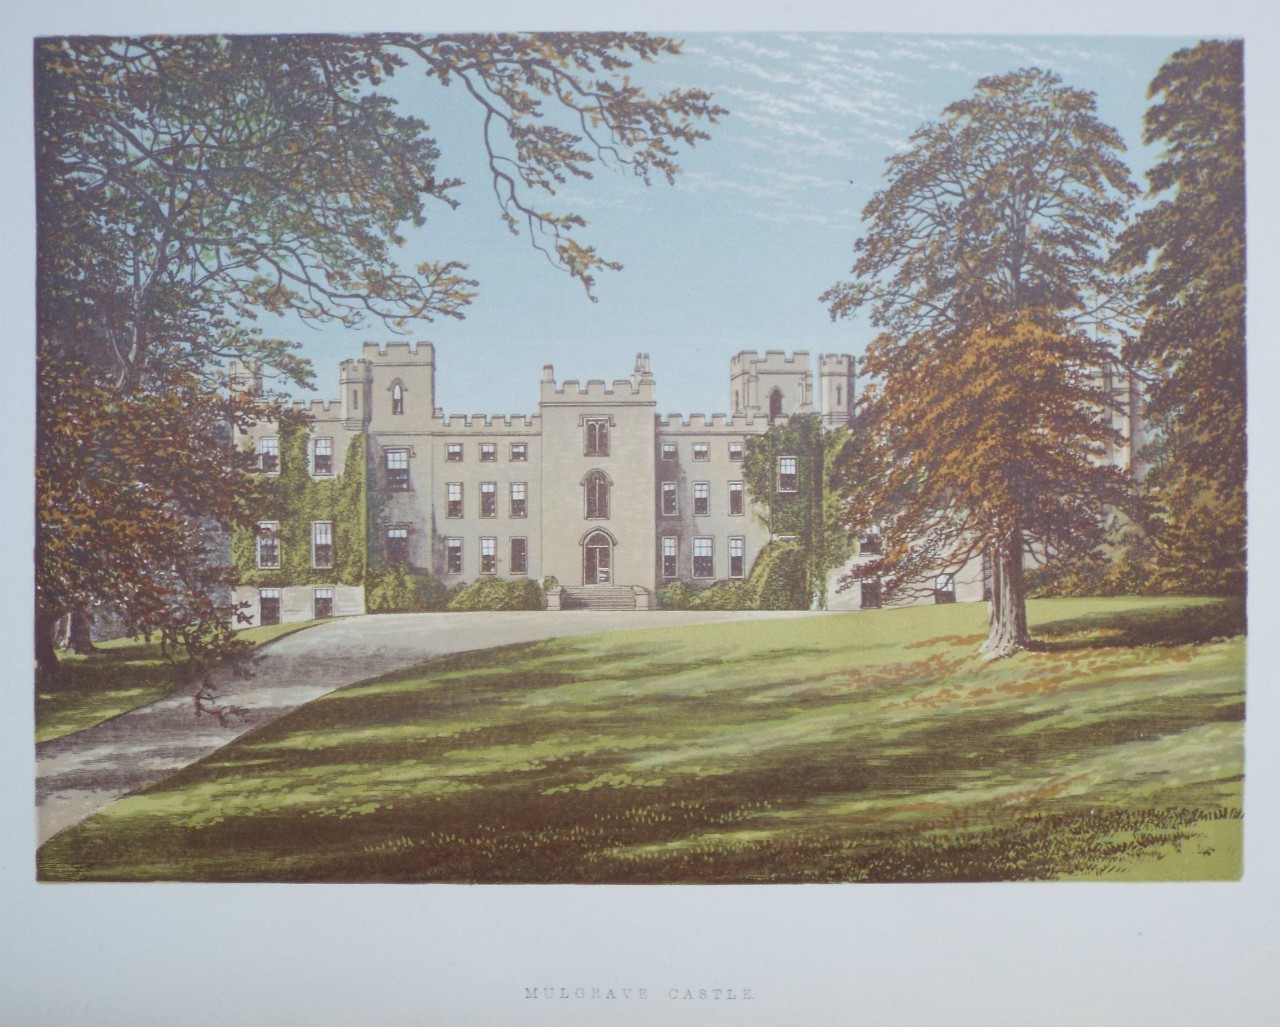 Chromo-lithograph - Mulgrave Castle.